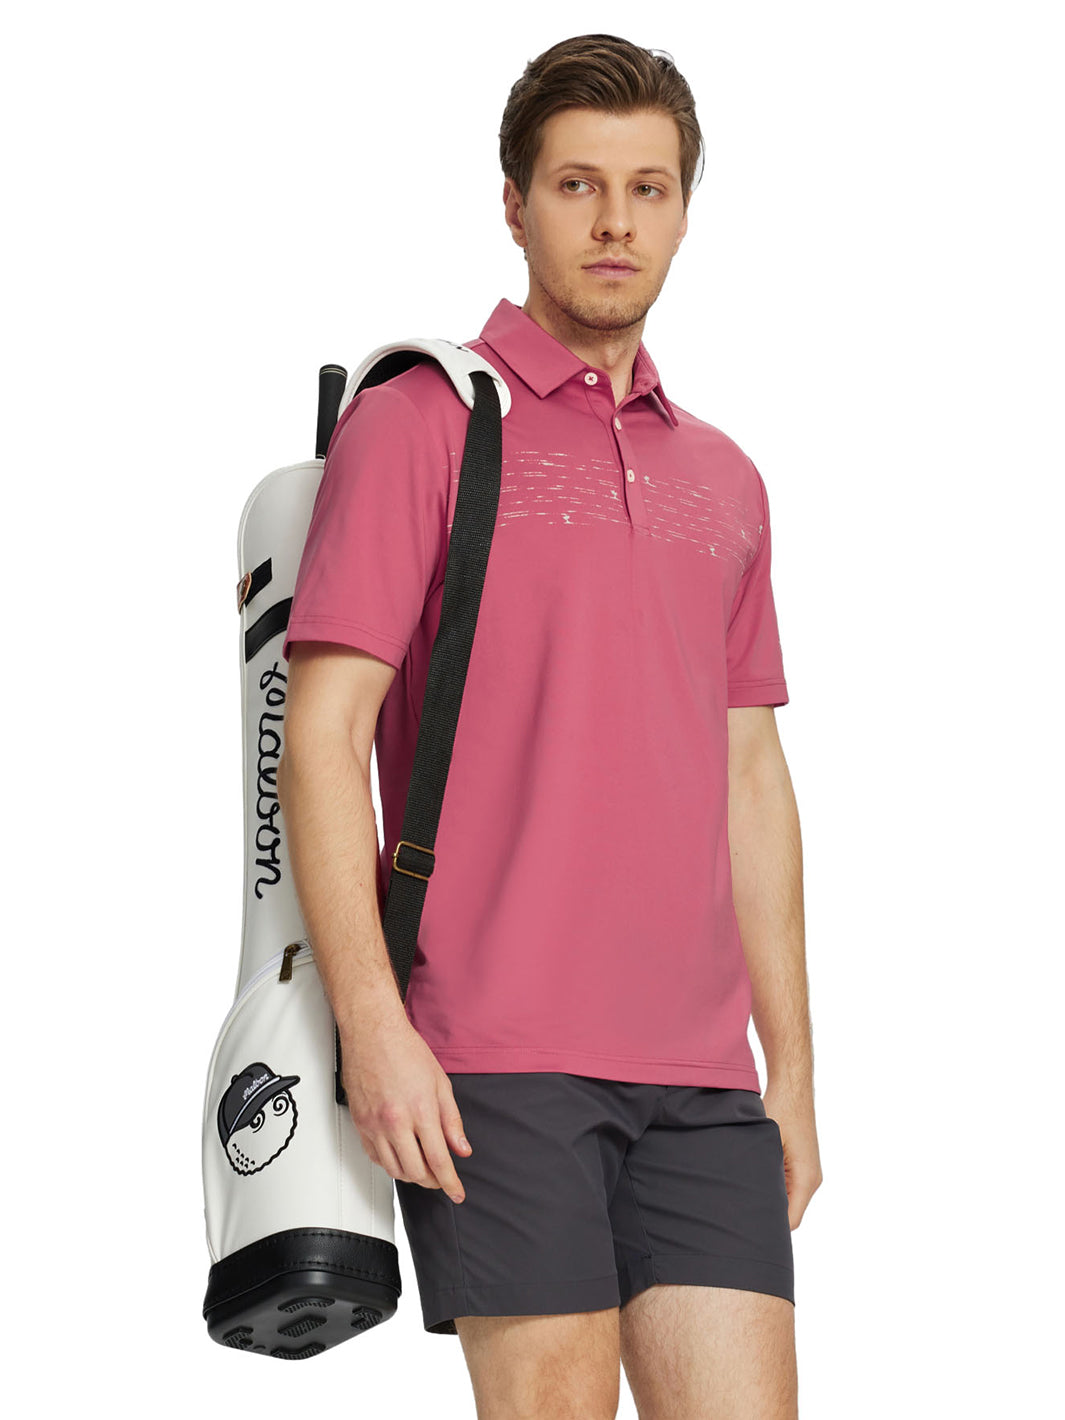 Men's Chest Print Golf Polo Shirts-Cranberry